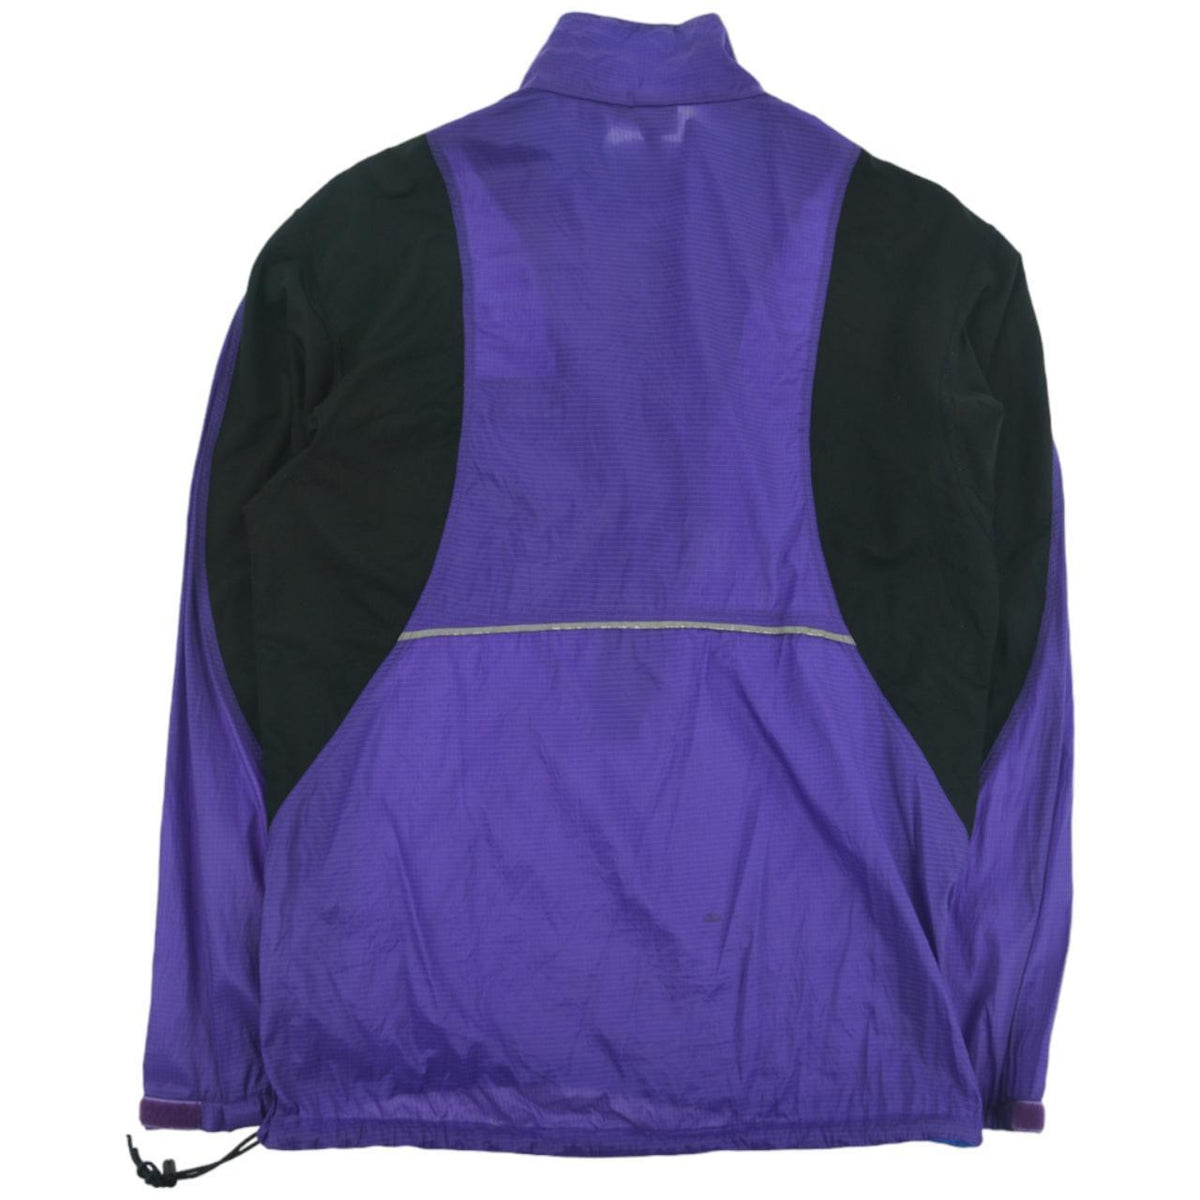 Vintage Patagonia Grid Jacket Size M